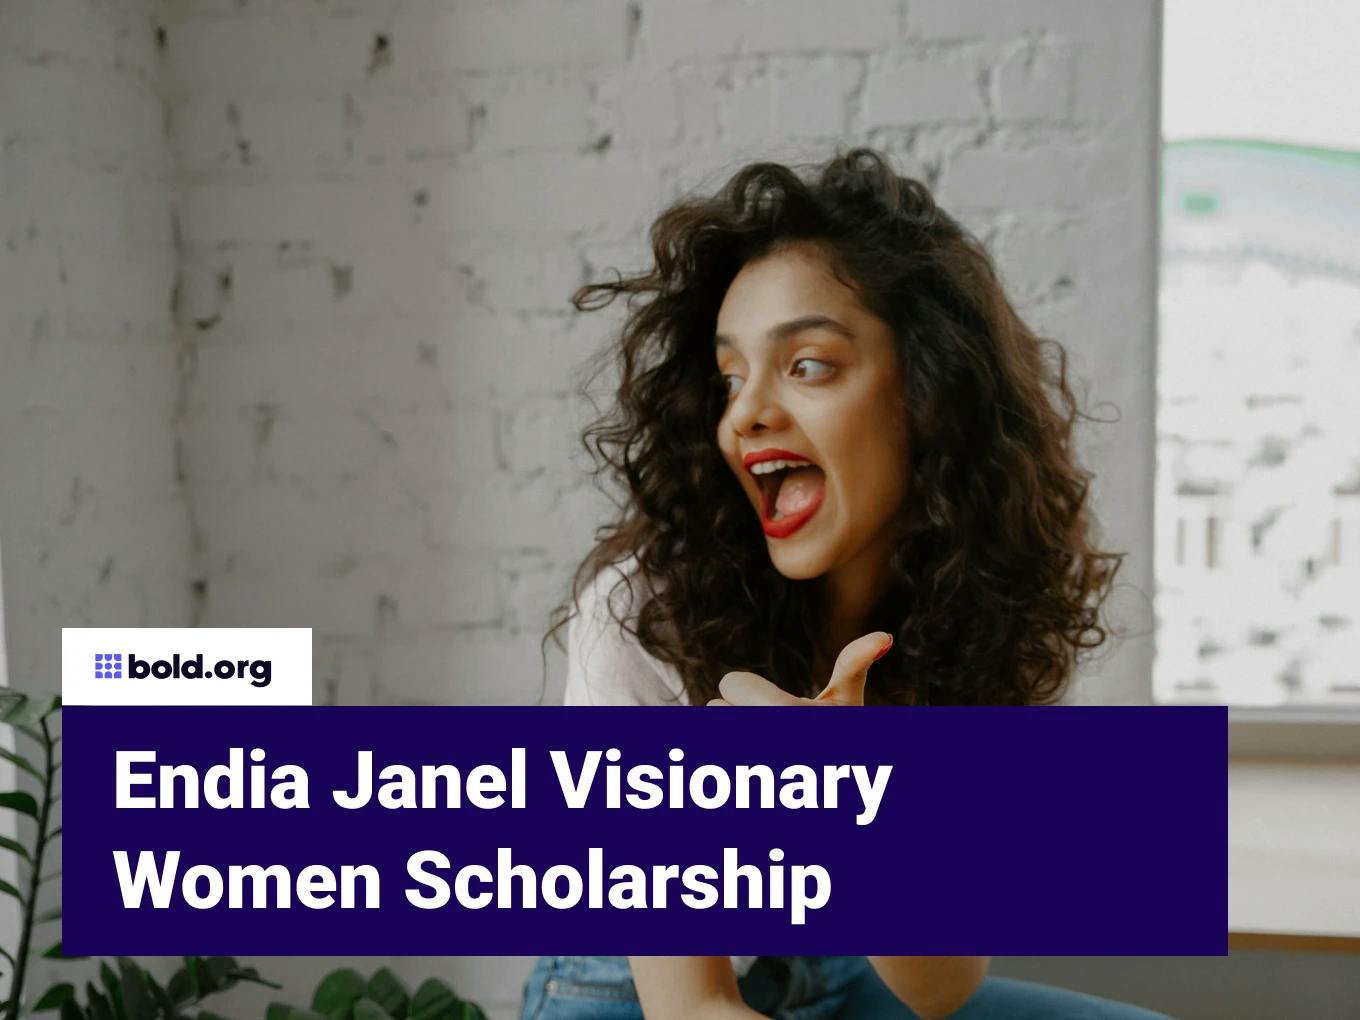 Endia Janel Visionary Women Scholarship